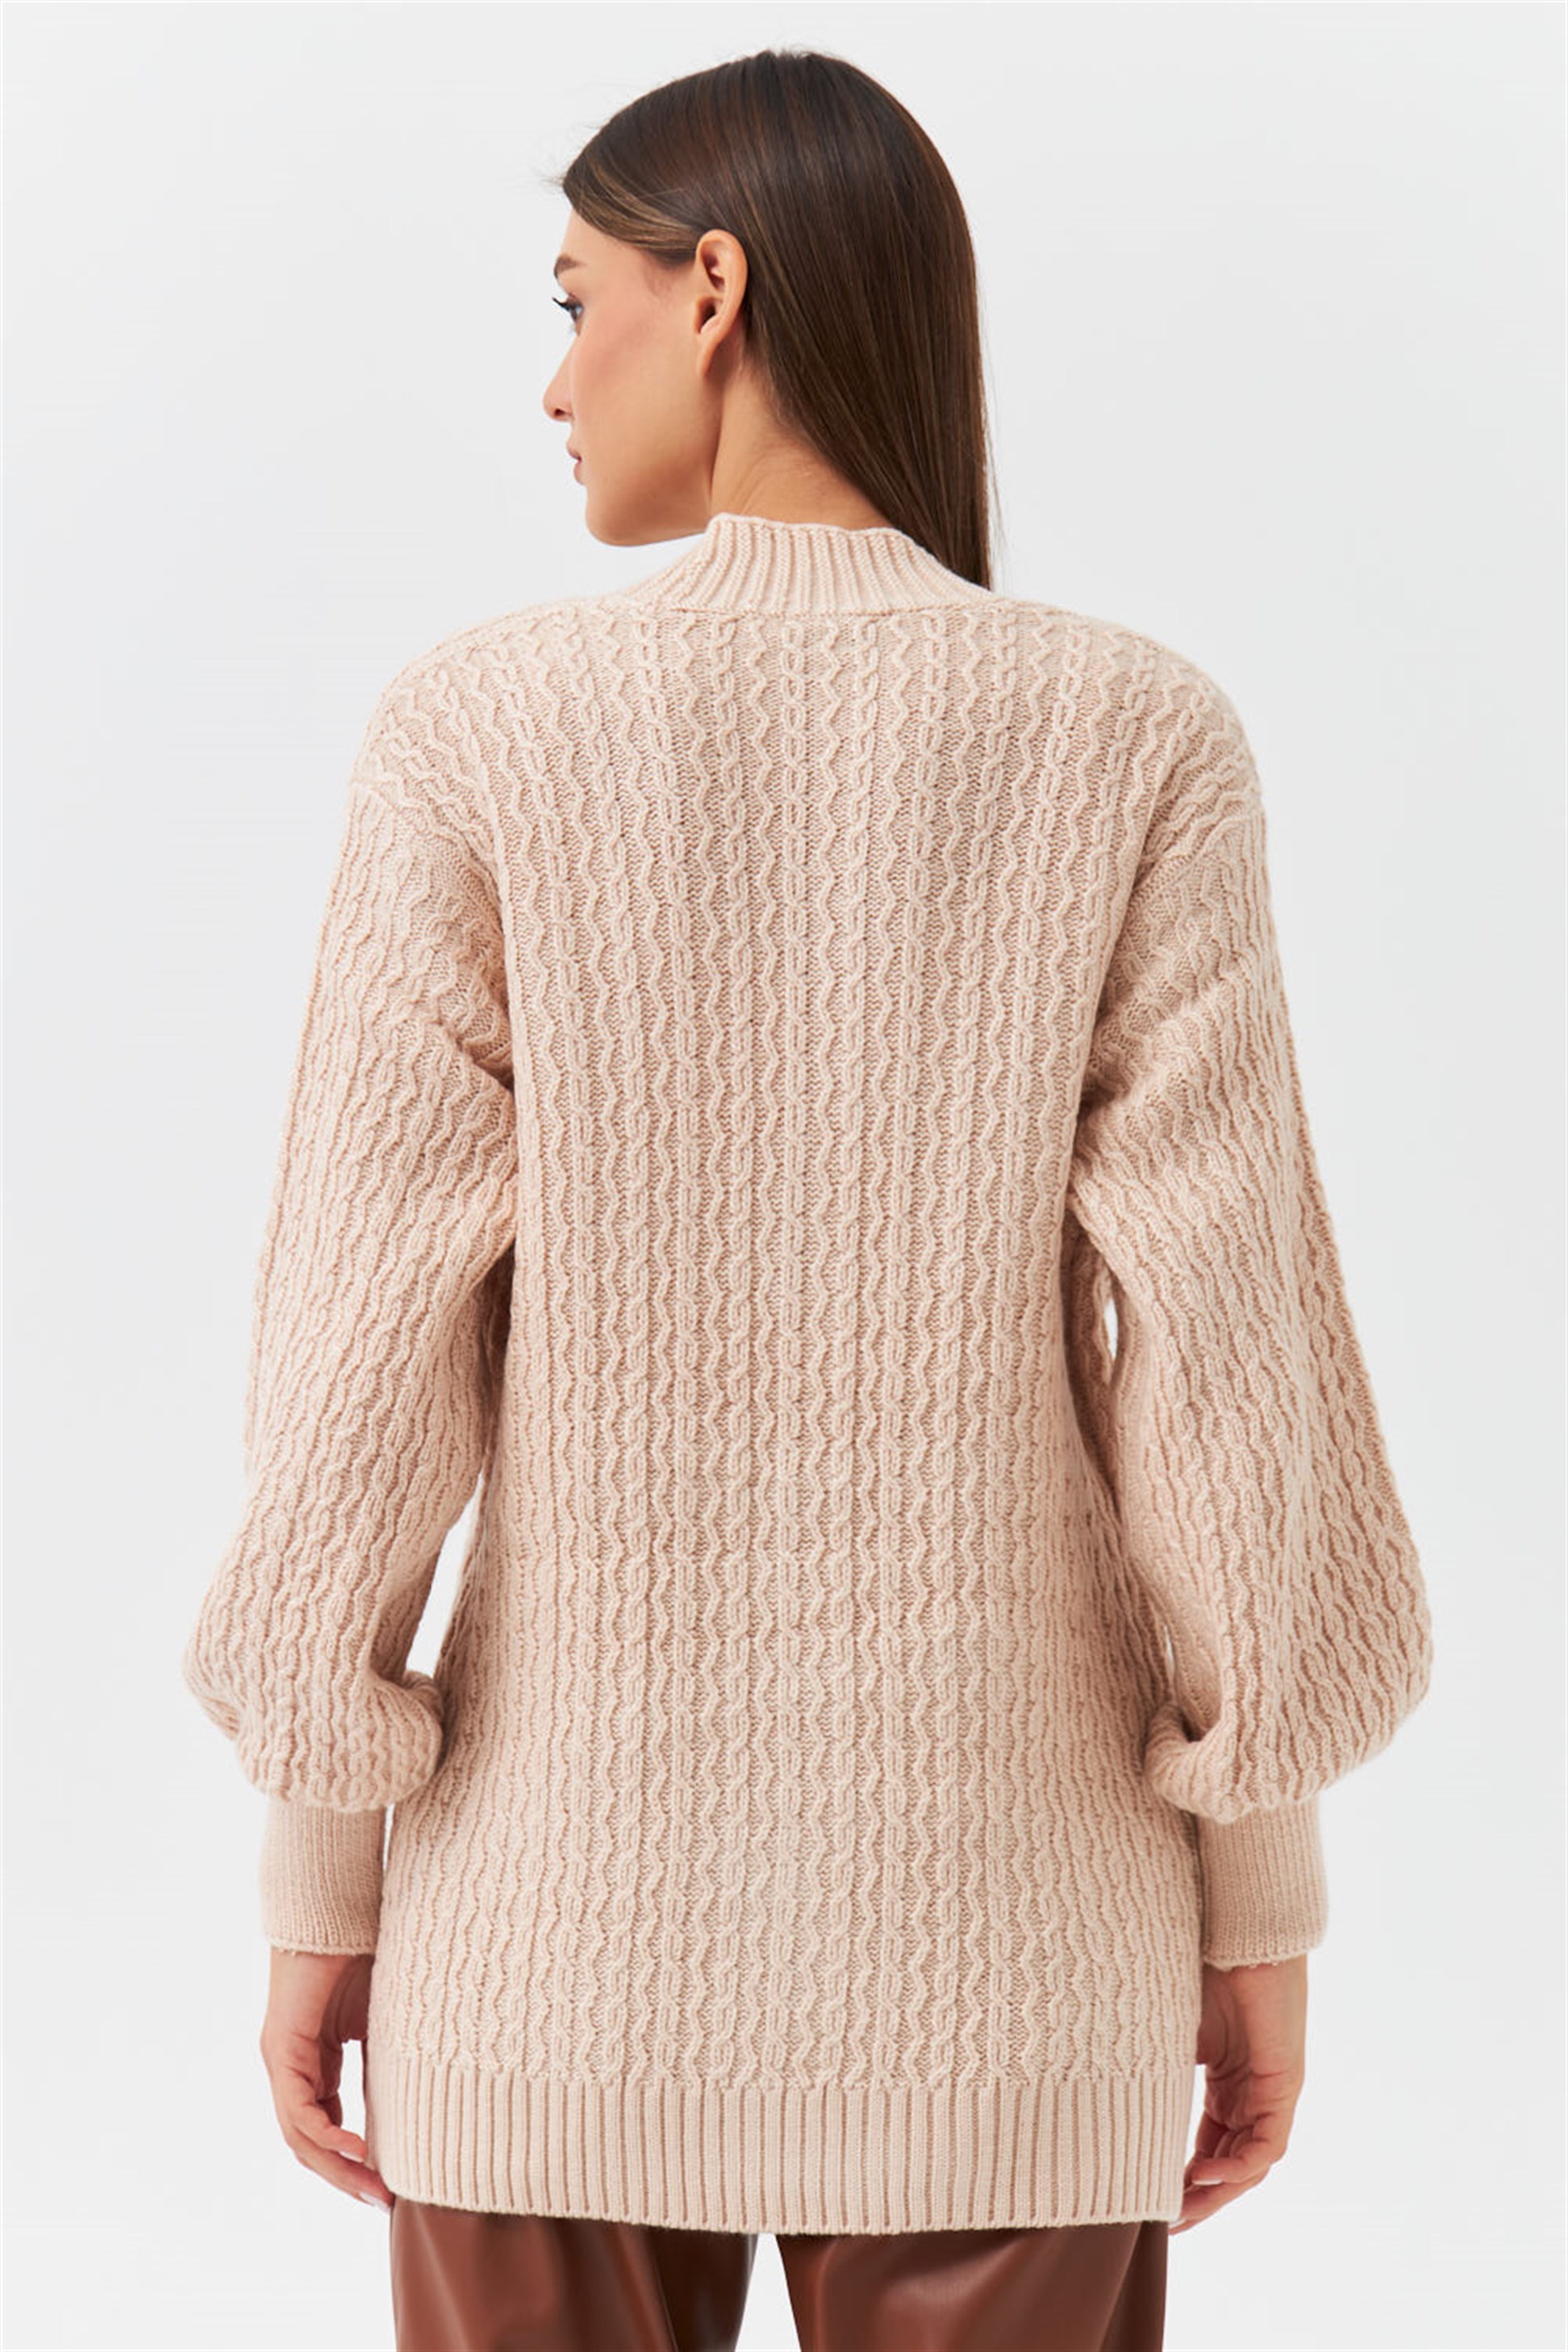 Beige S Zara Strickjacke Rabatt 68 % DAMEN Pullovers & Sweatshirts Strickjacke Stricken 